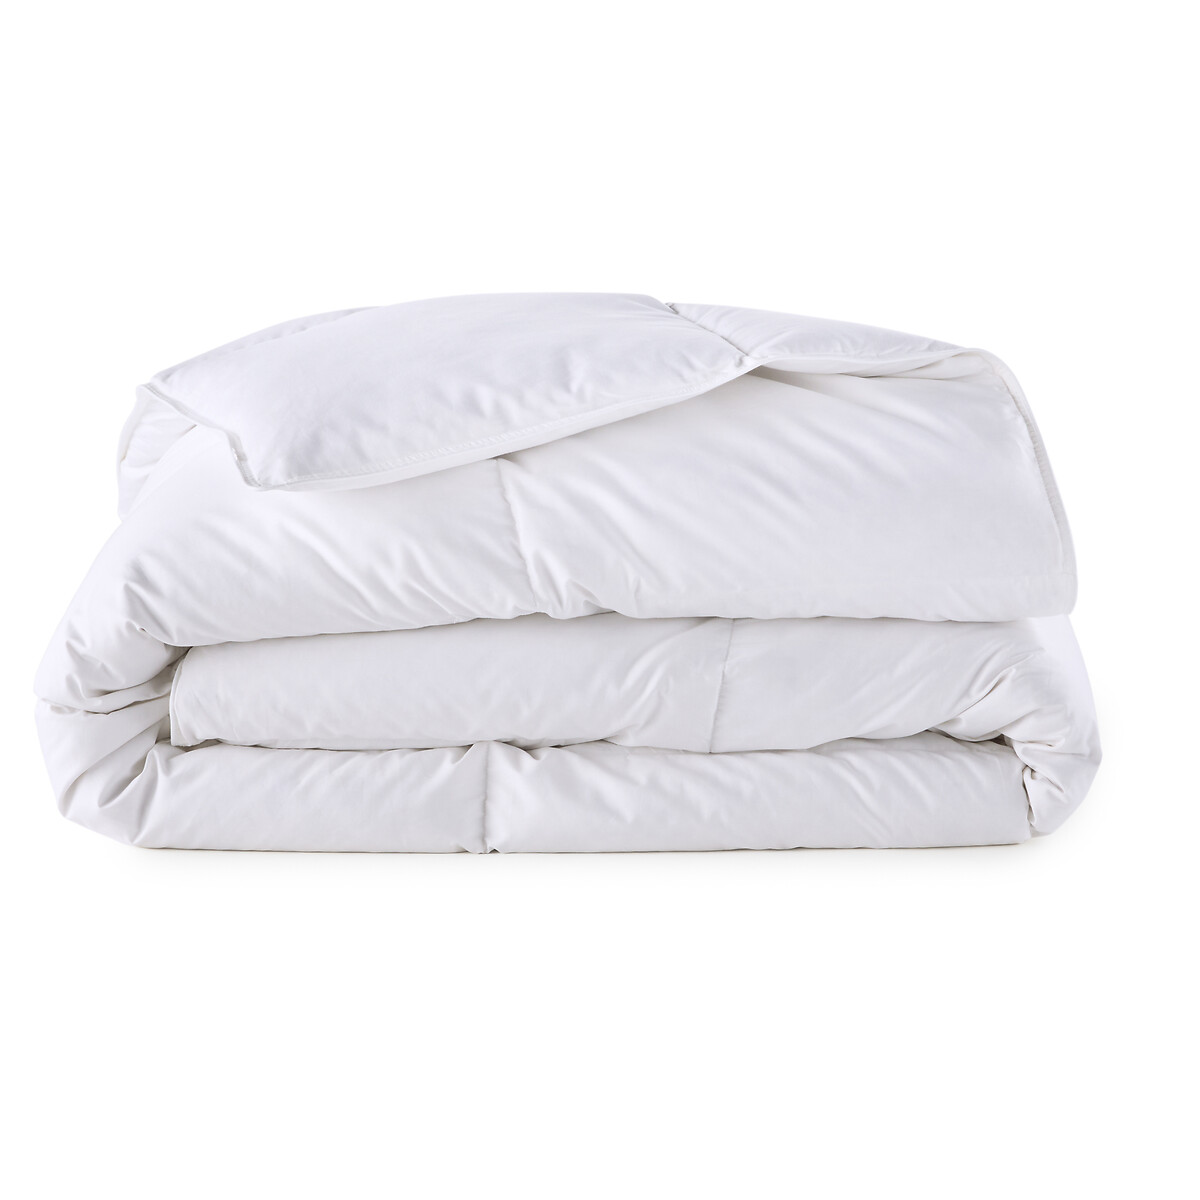 Одеяло LaRedoute 50 пуха 370 гм2 с обработкой Proneem 200 x 200 см белый, размер 200 x 200 см - фото 2